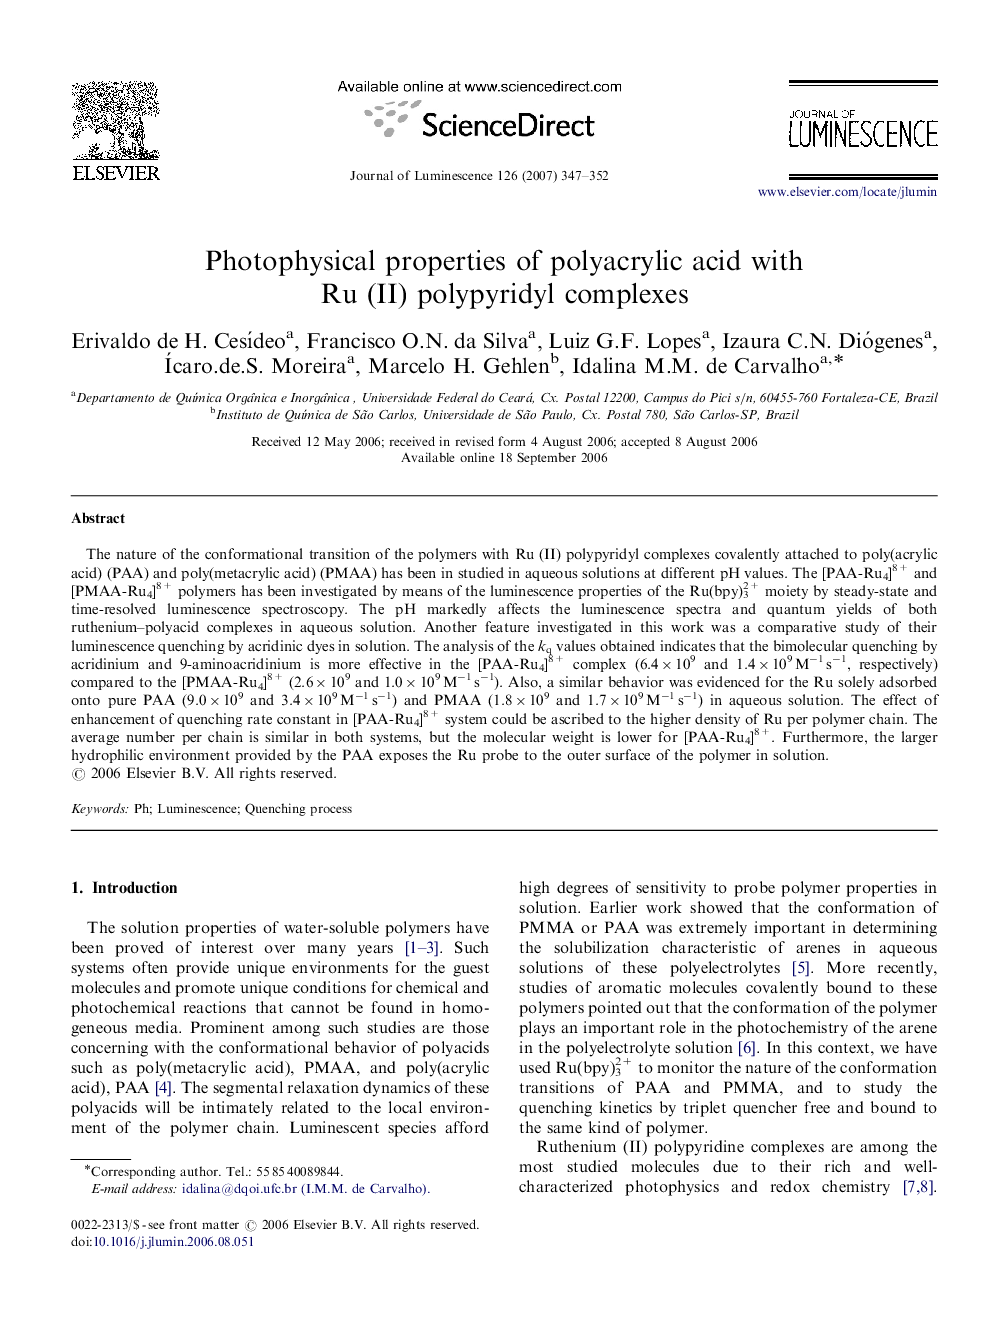 Photophysical properties of polyacrylic acid with Ru (II) polypyridyl complexes